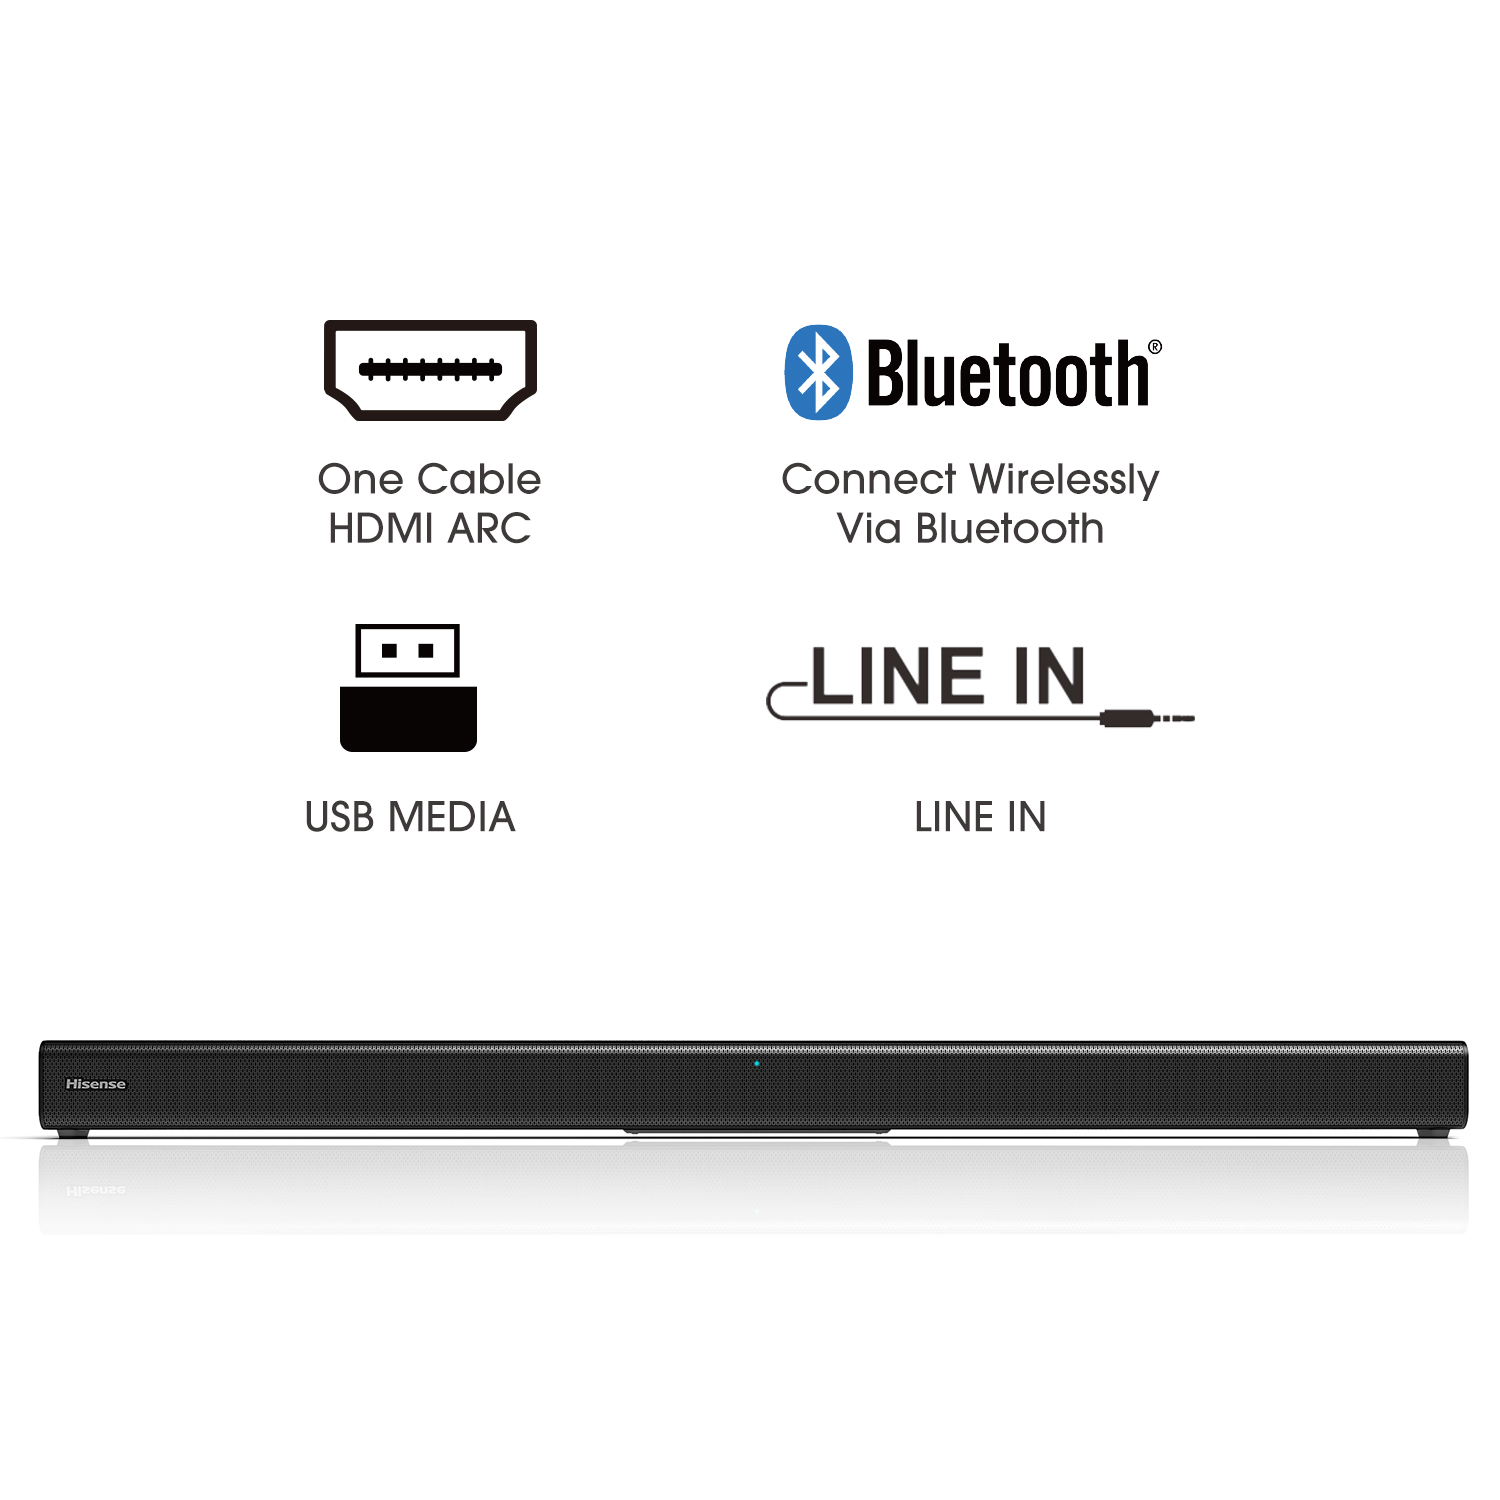 Hisense HS205 2.0ch Sound Bar Home Theater System, 60W, Roku TV ready, Bluetooth, HDMI ARC/Optical/AUX/USB (Model HS205) Black - image 2 of 12